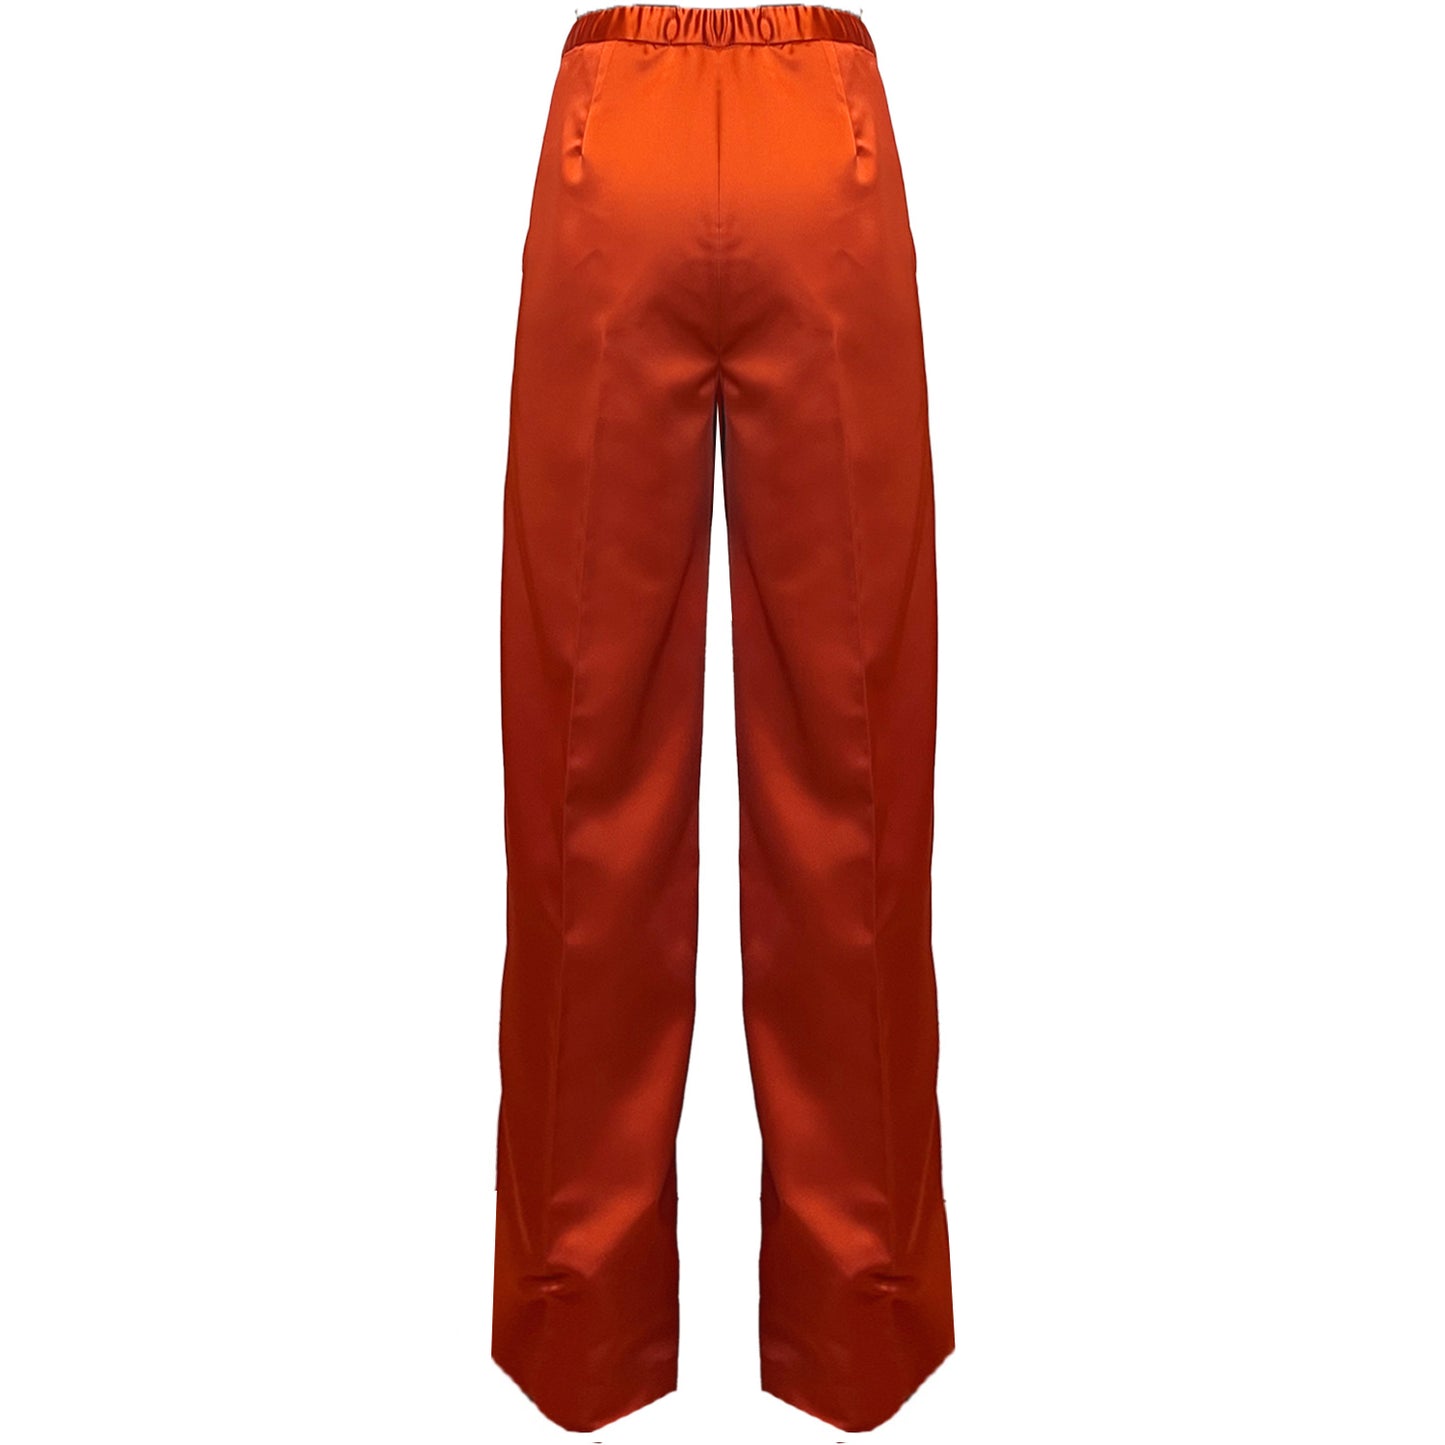 Rothko Collection Orange Pants